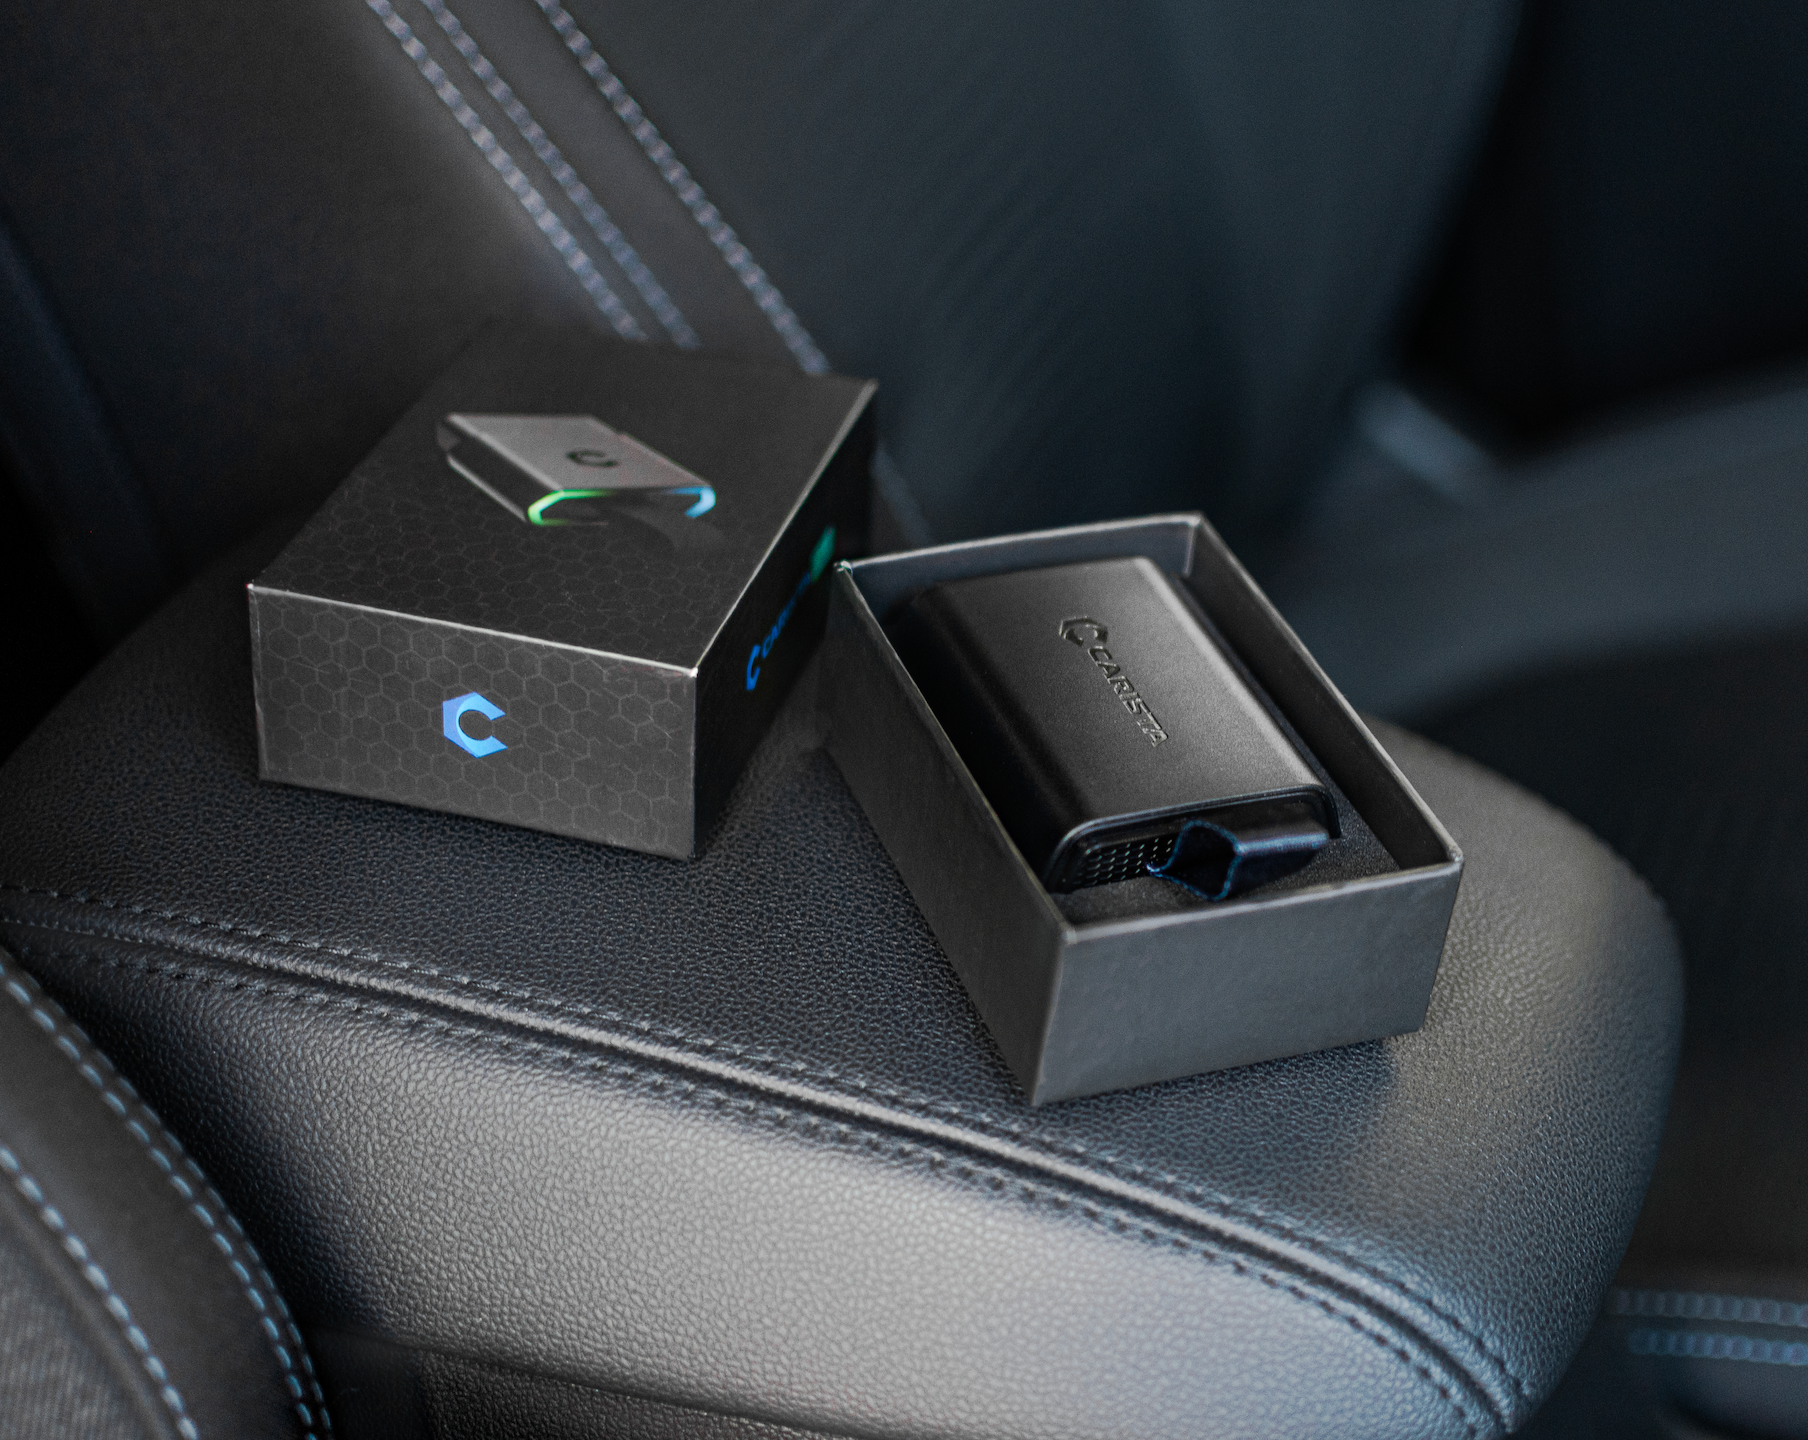 Carista OBD2 Bluetooth Adapter Review: Diagnose & Customize Your Car! 